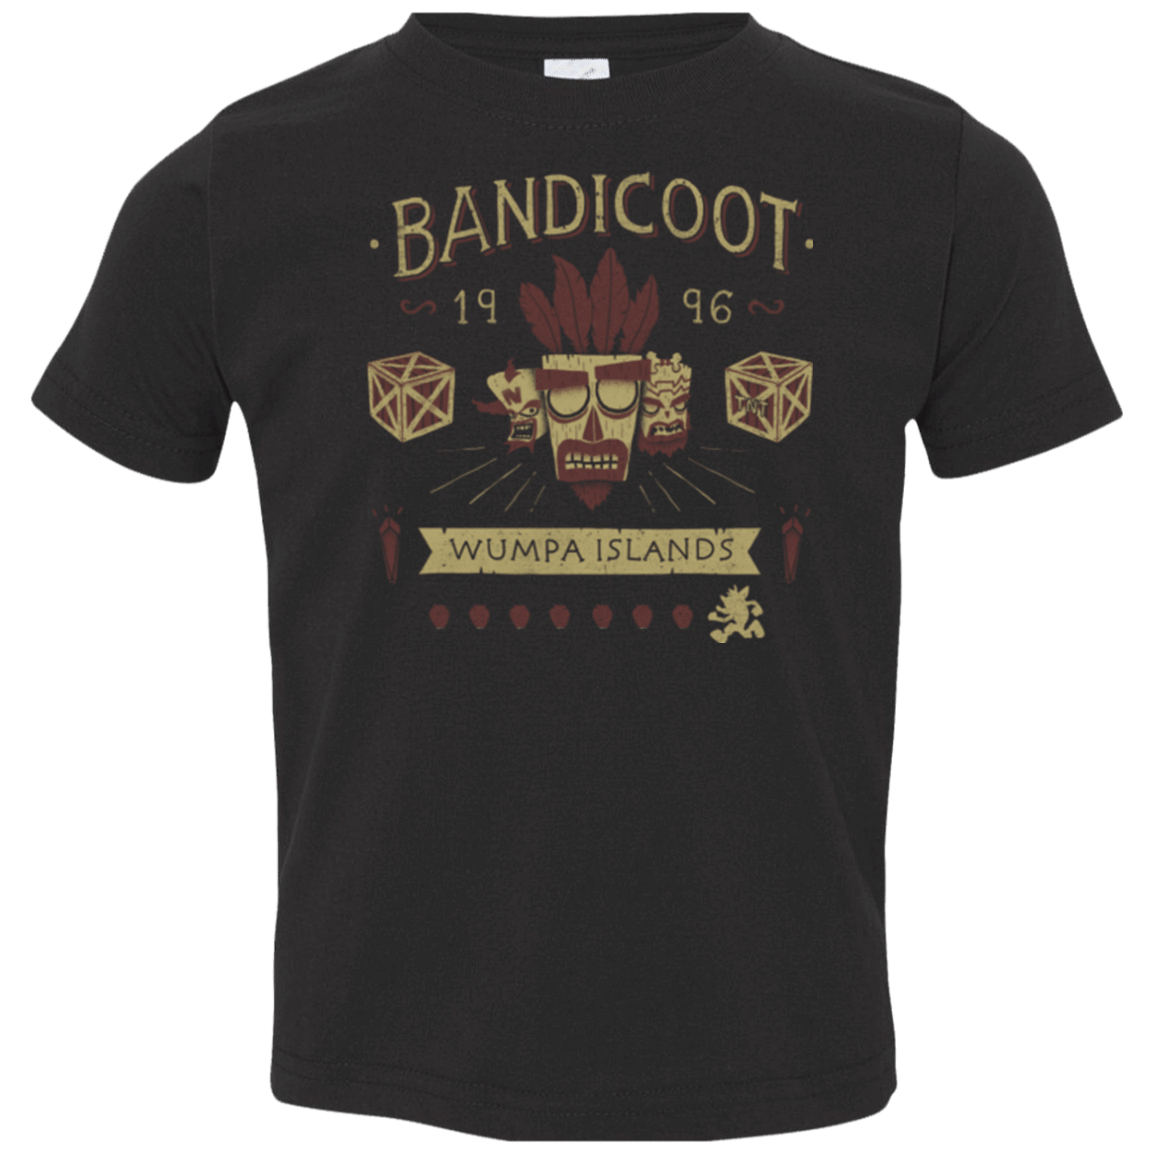 T-Shirts Black / 2T Bandicoot Time Toddler Premium T-Shirt